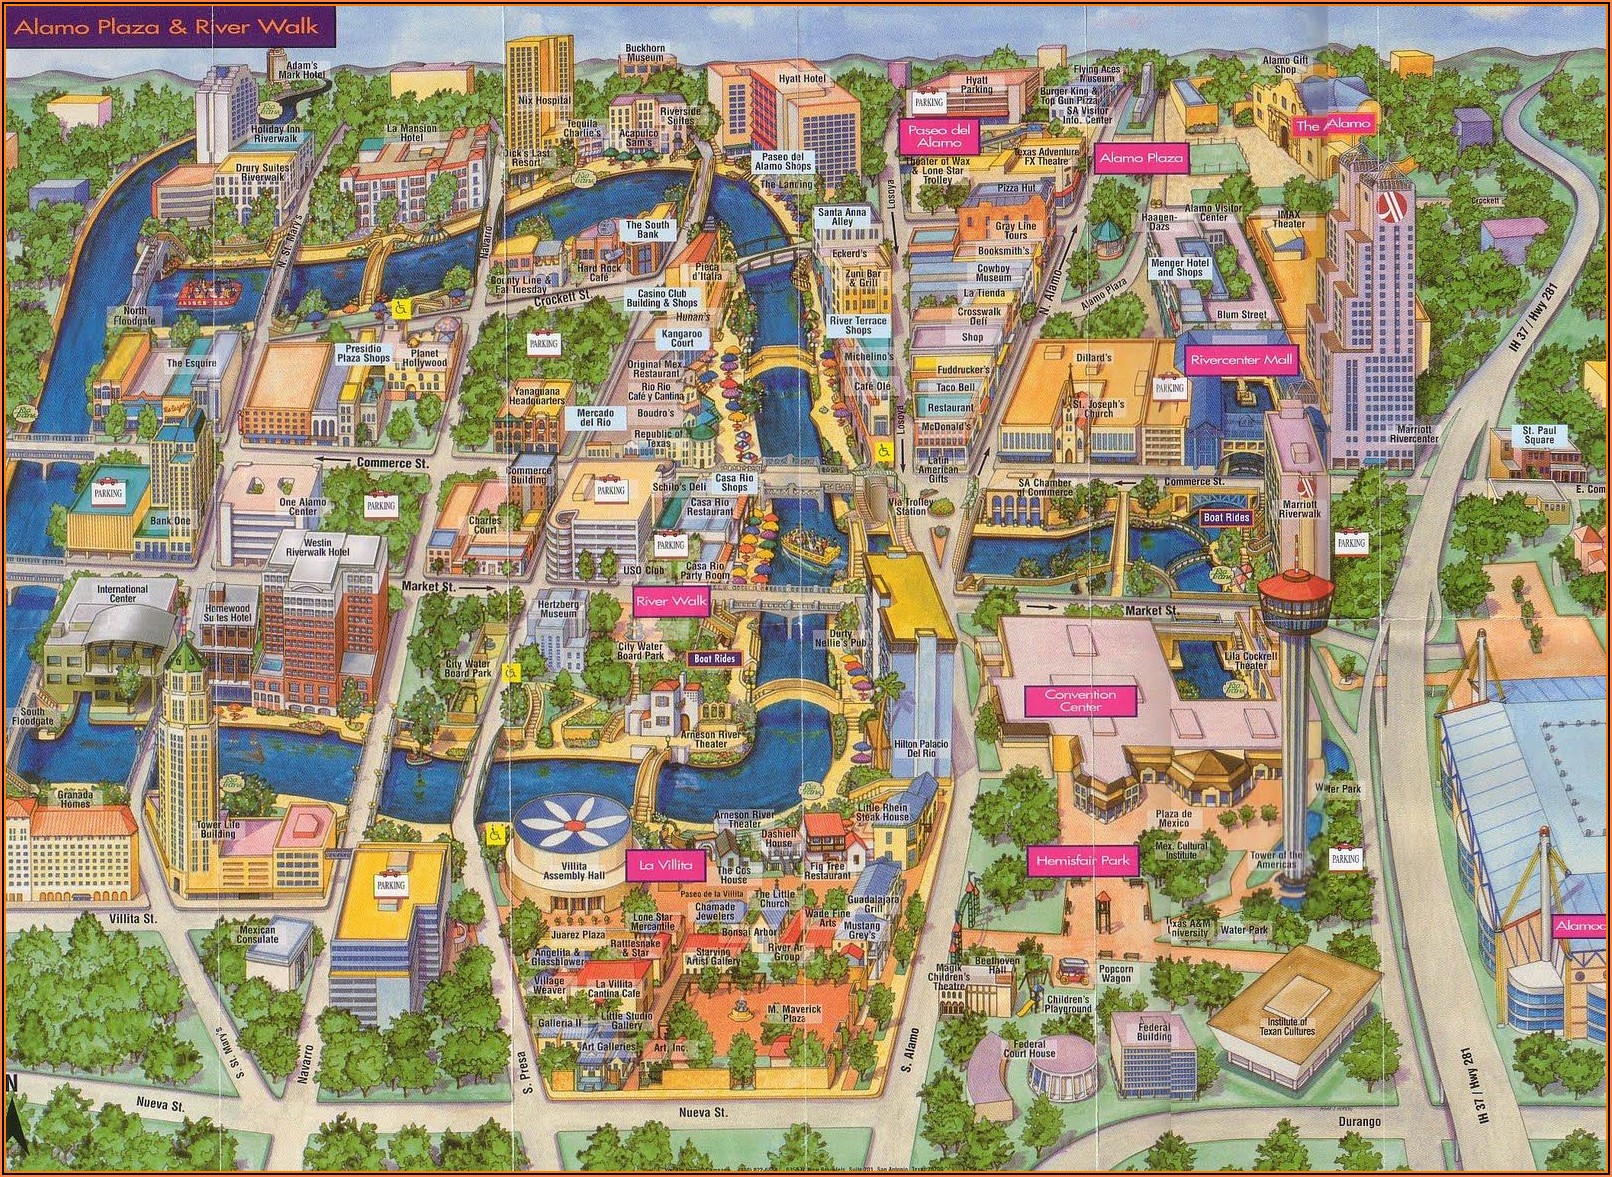 Map Of Hotels On The Riverwalk In San Antonio Texas